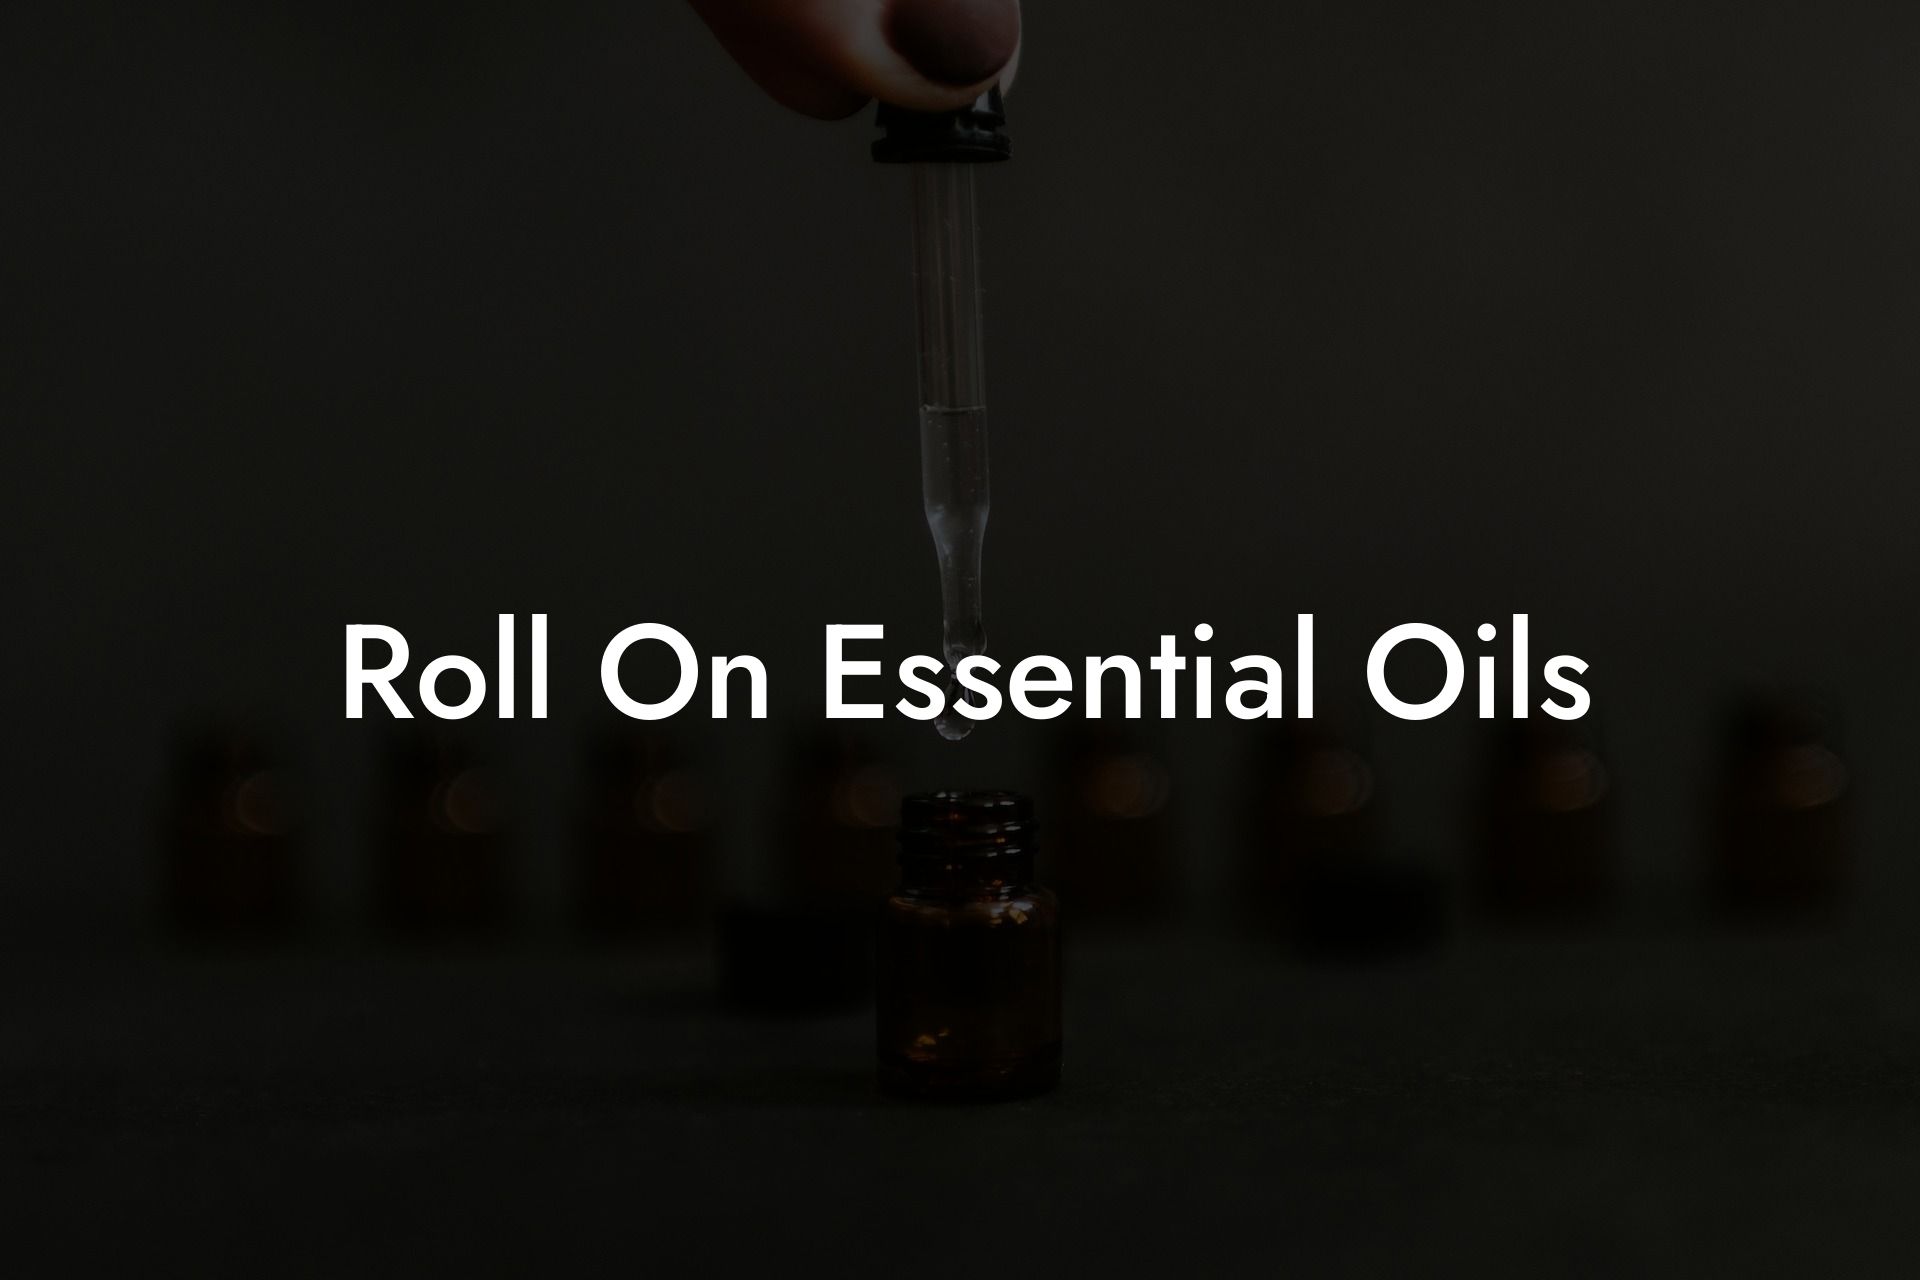 Roll On Essential Oils